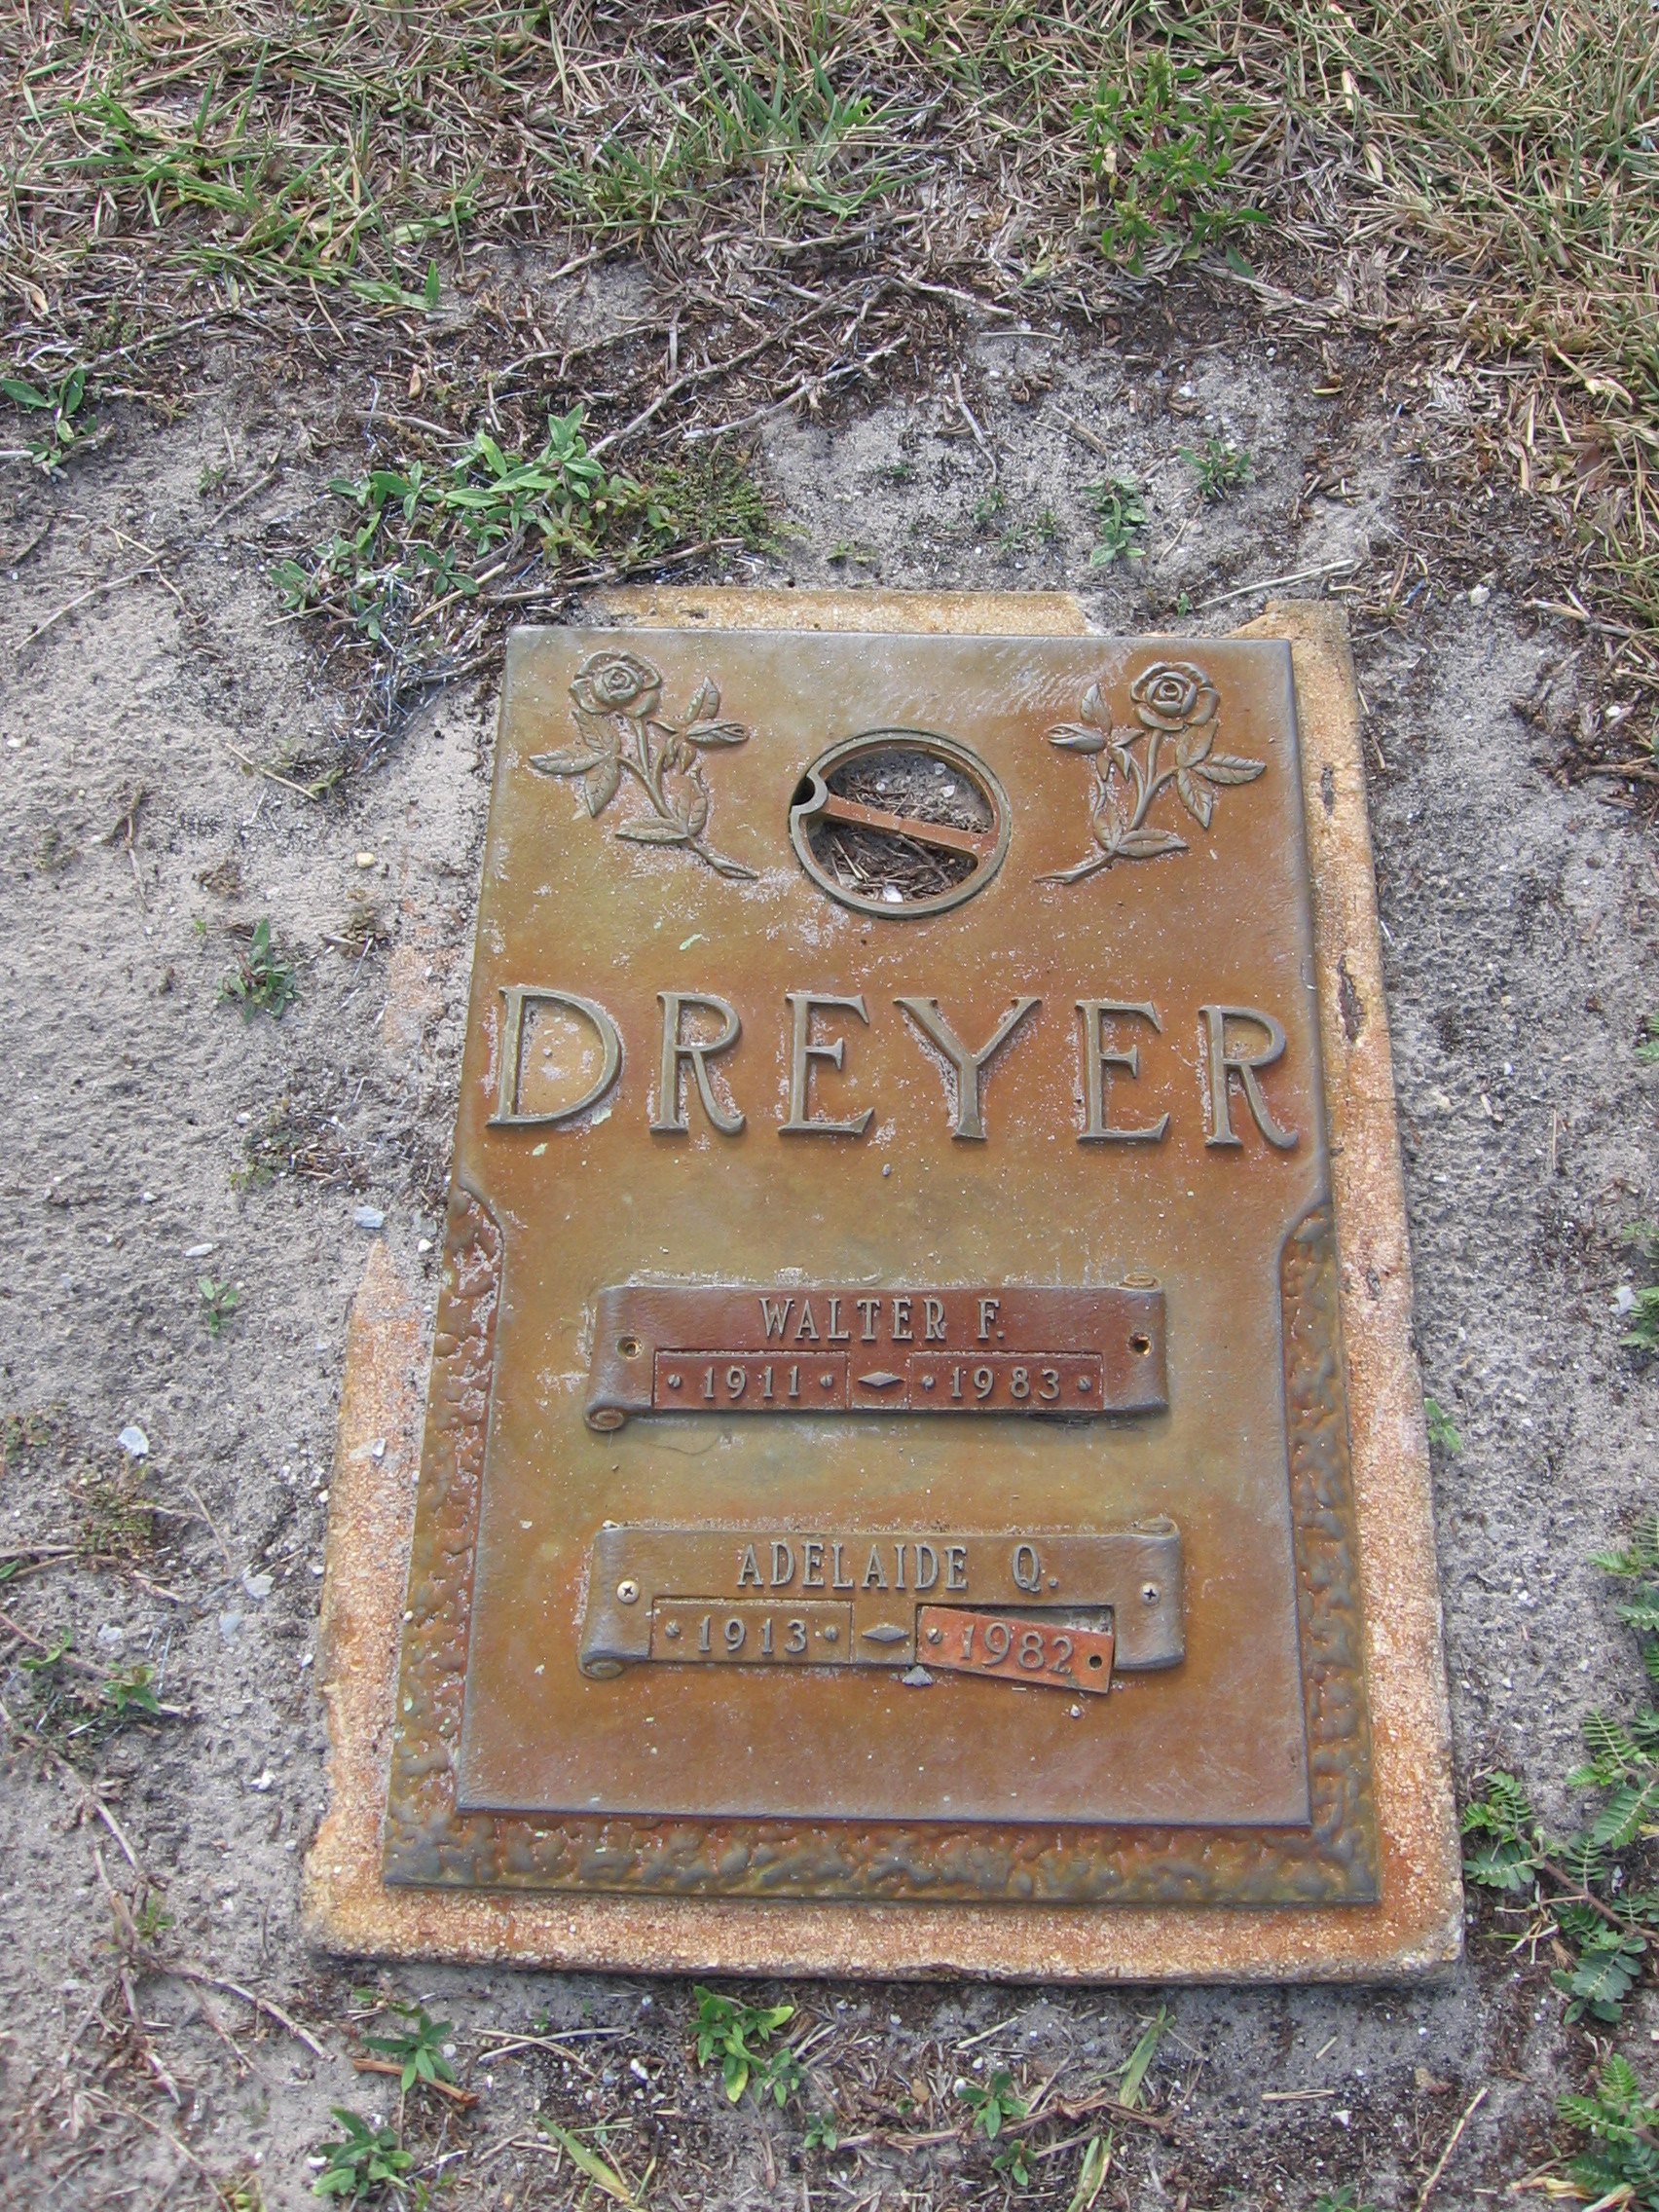 Walter F Dreyer